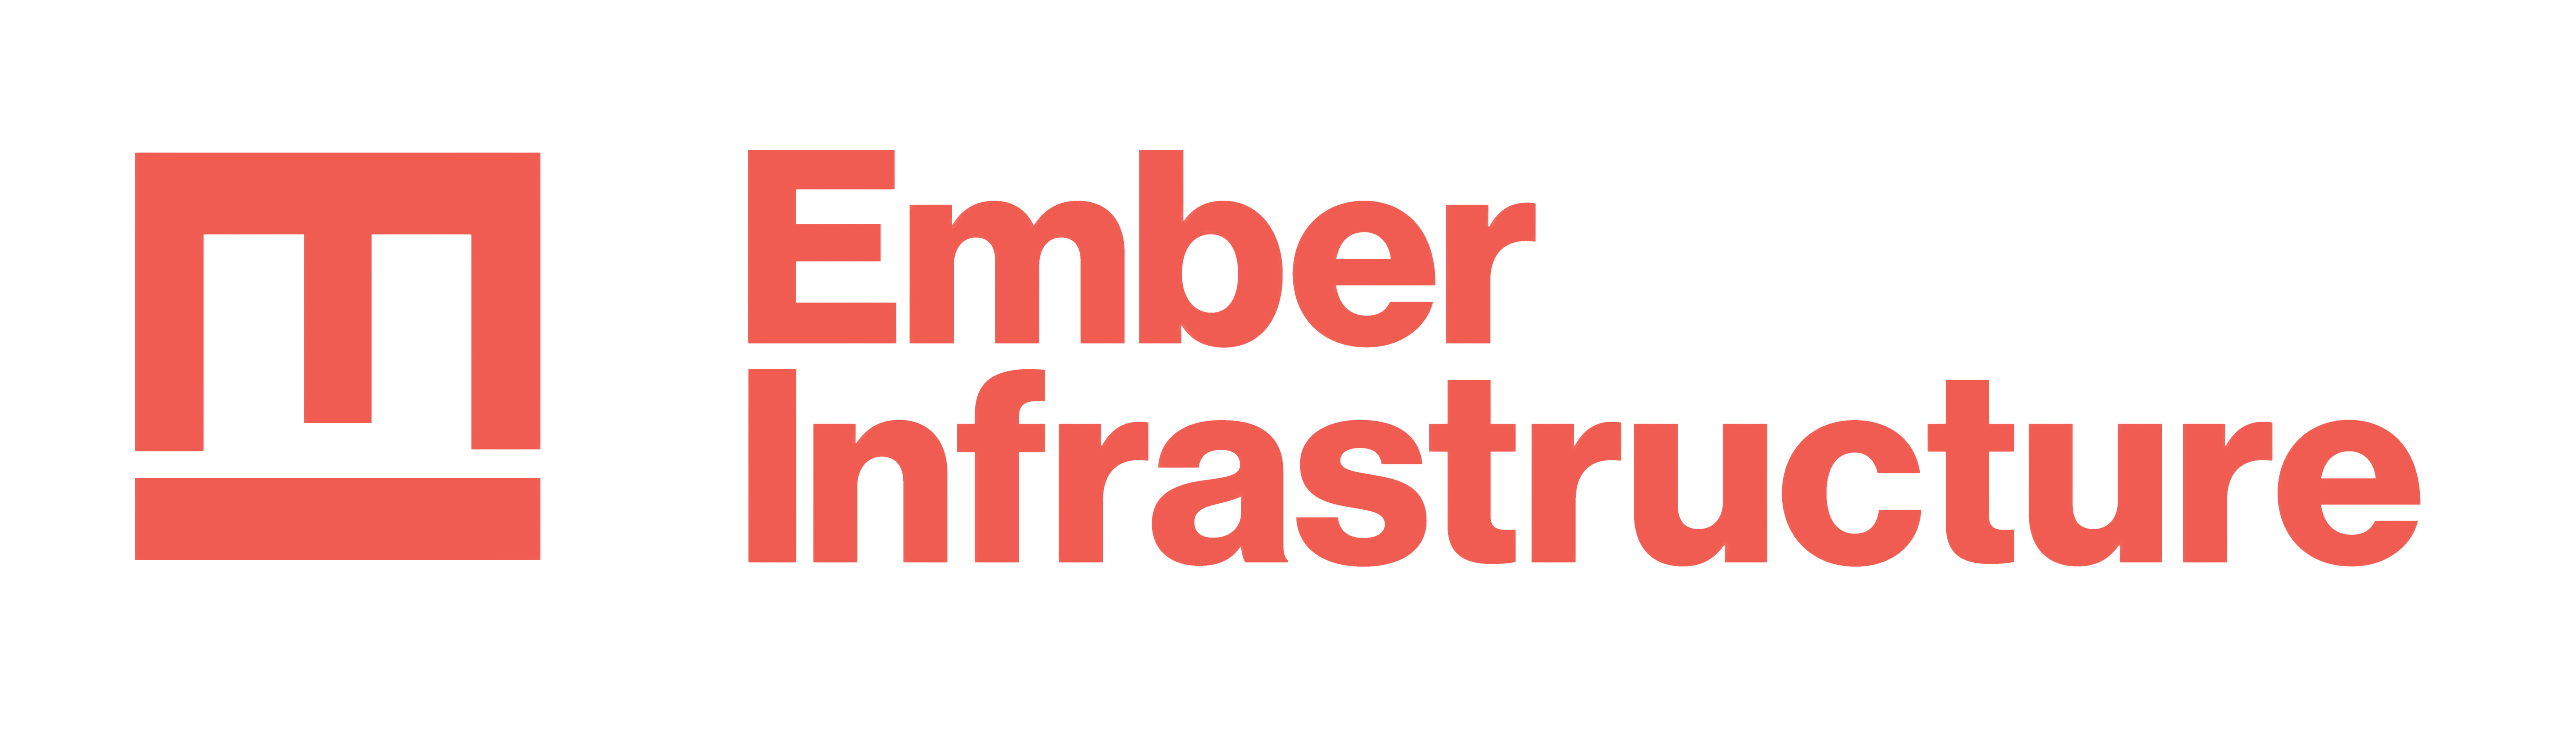 Ember Infrastructure